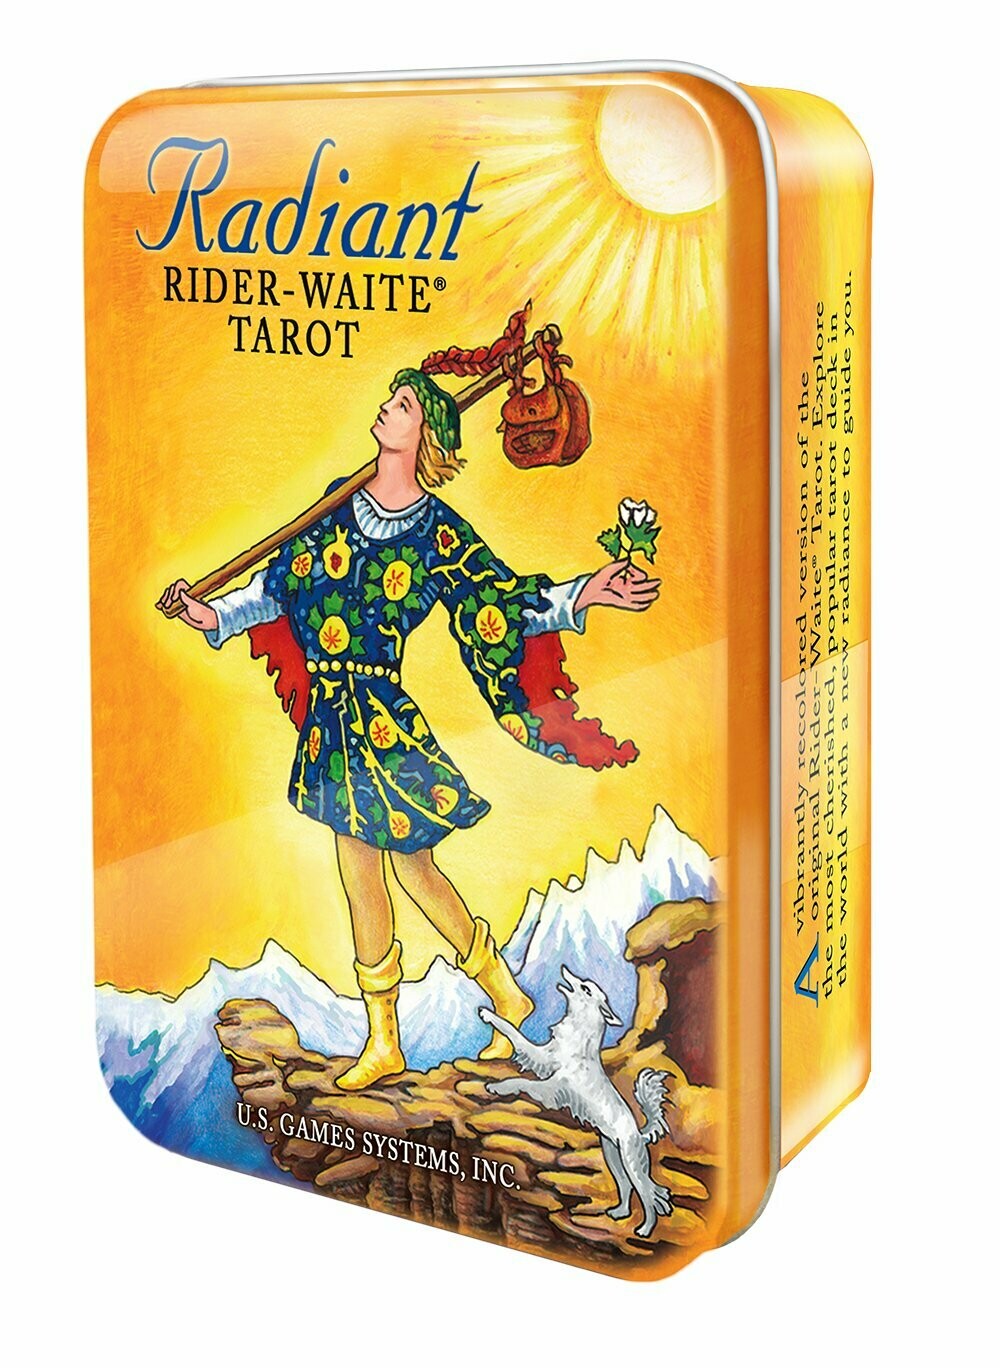 Radiant Rider-Waite Tarot tin